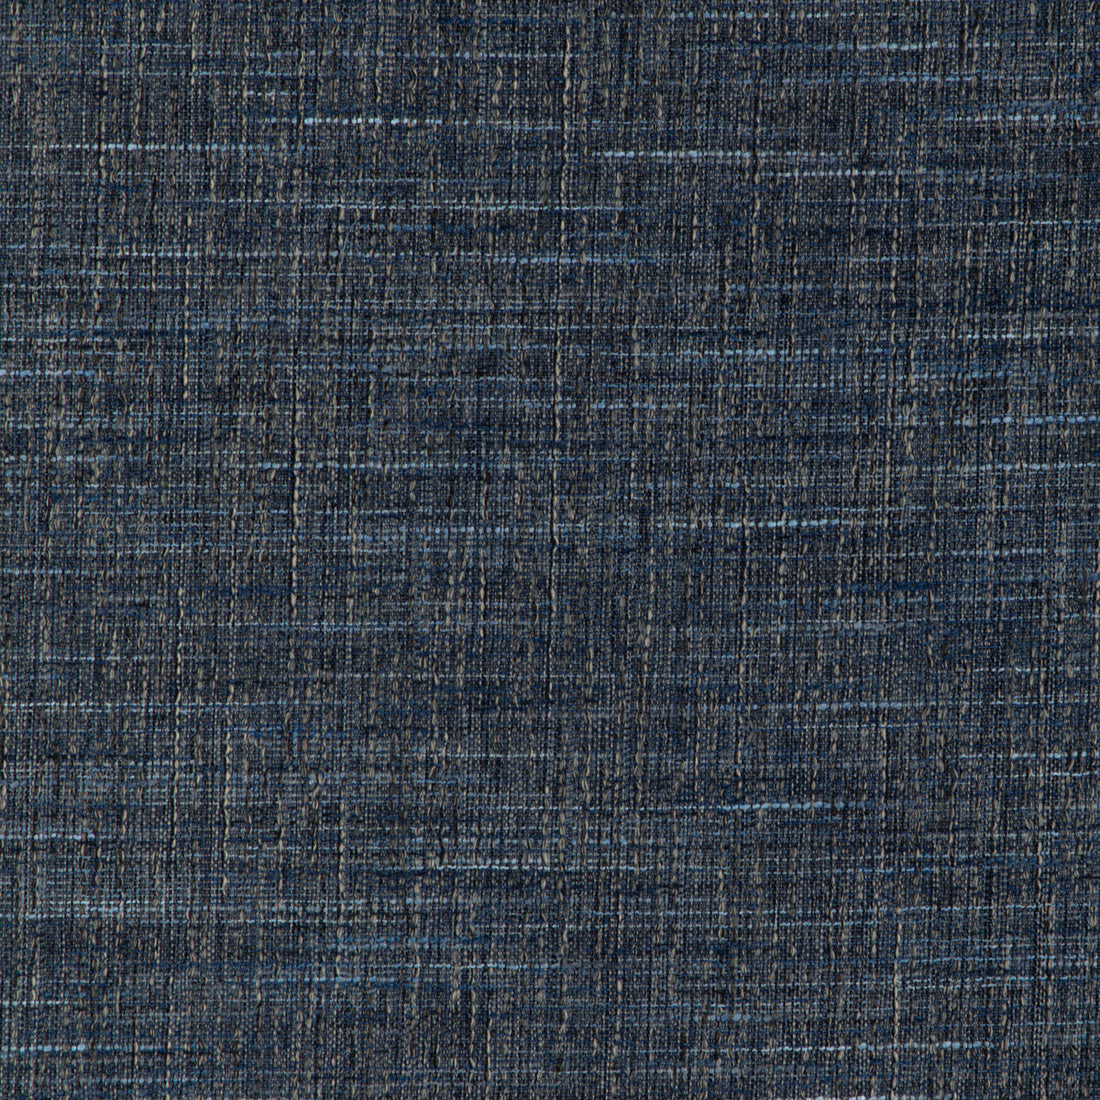 Kravet Smart fabric in 36661-516 color - pattern 36661.516.0 - by Kravet Smart in the Performance Kravetarmor collection